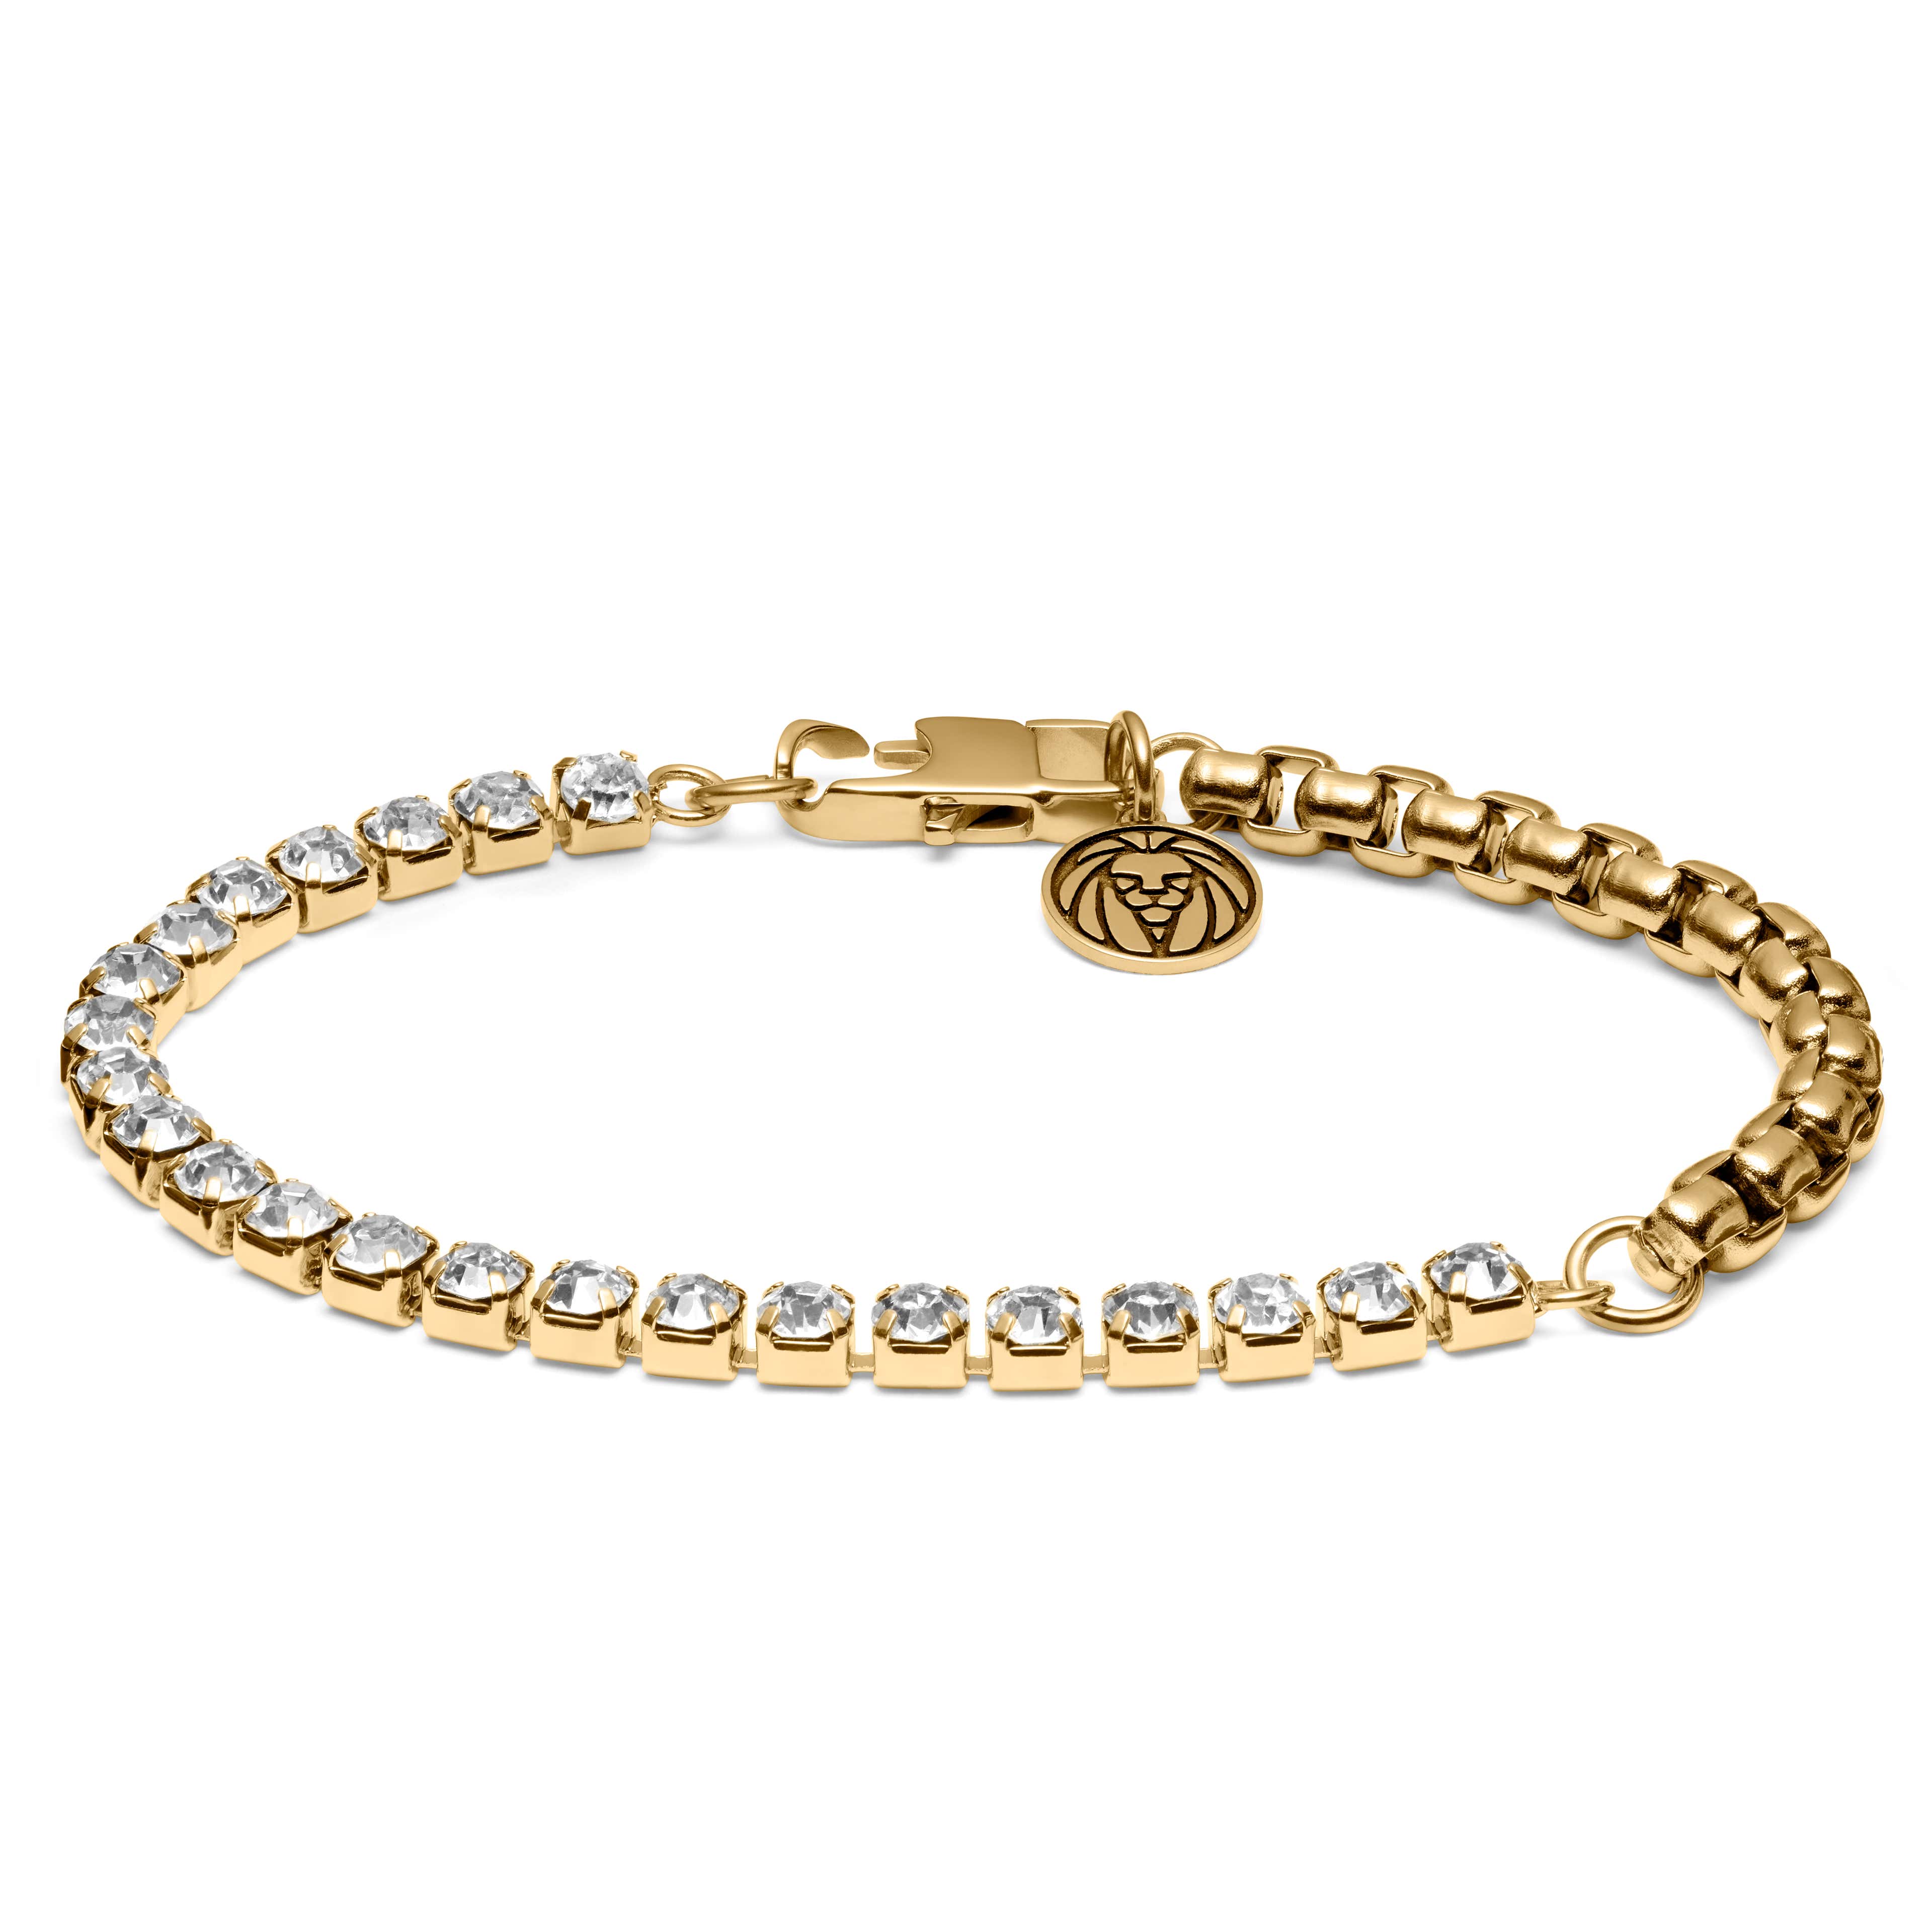 Craig Amager Gold-Tone Box Chain Bracelet with Glass Diamonds